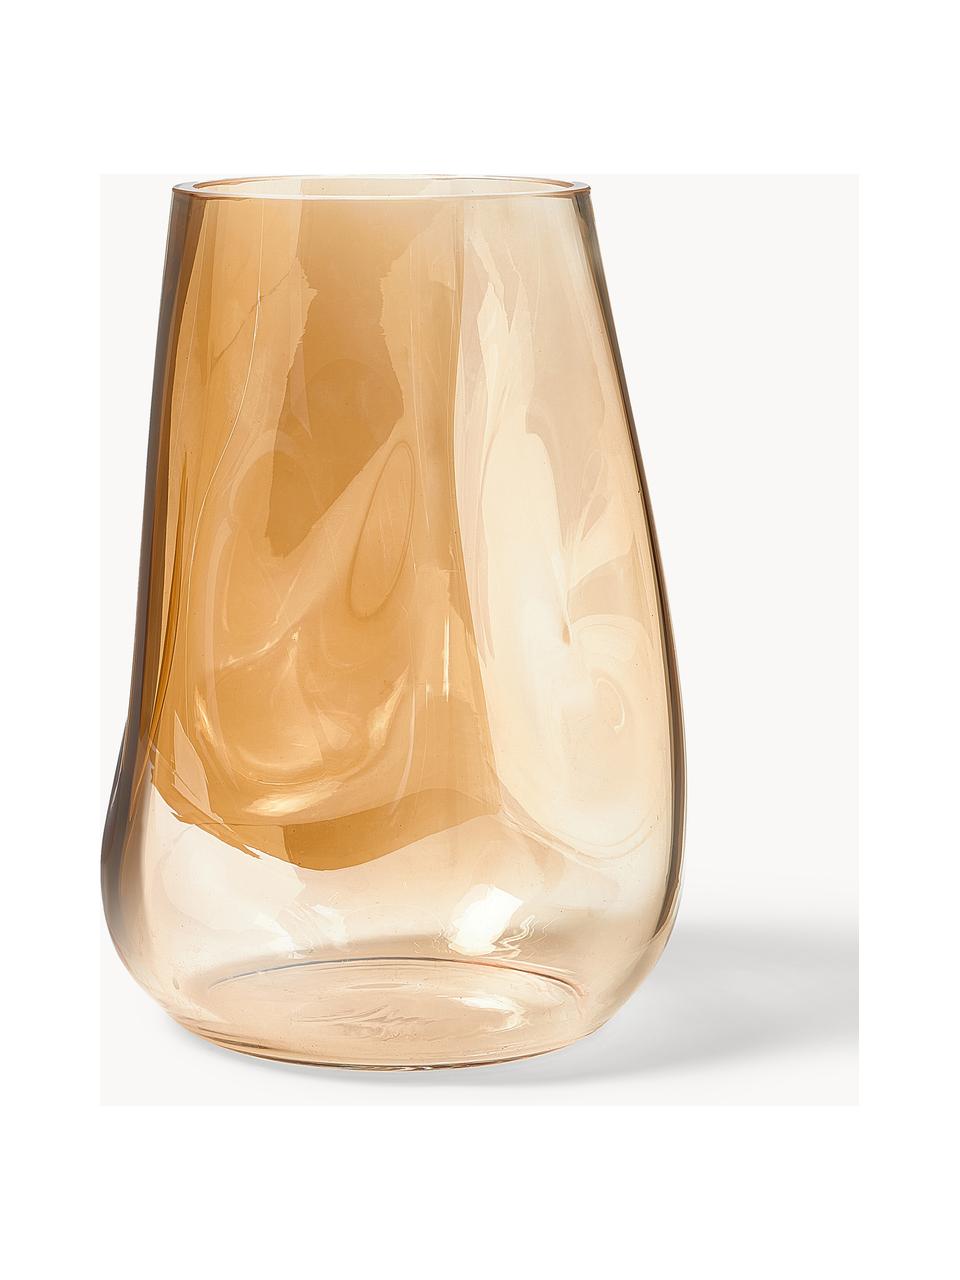 Mondgeblazen witte wijnglazen Ellery, 4 stuks, Glas, Transparant, Ø 9 x H 21 cm, 400 ml